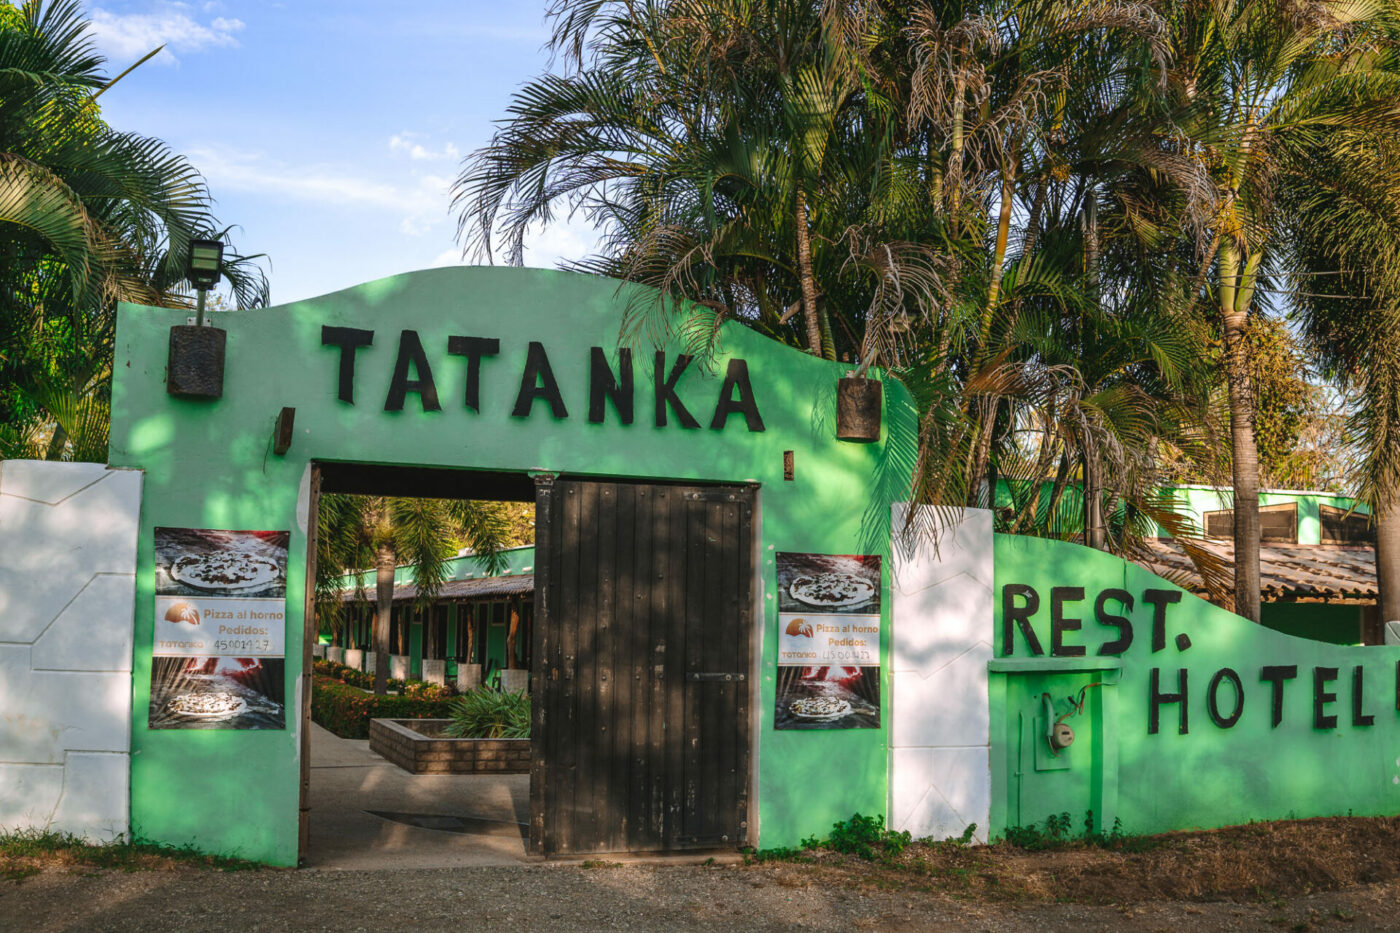 Entrance at Tatanka hotel and restaurant